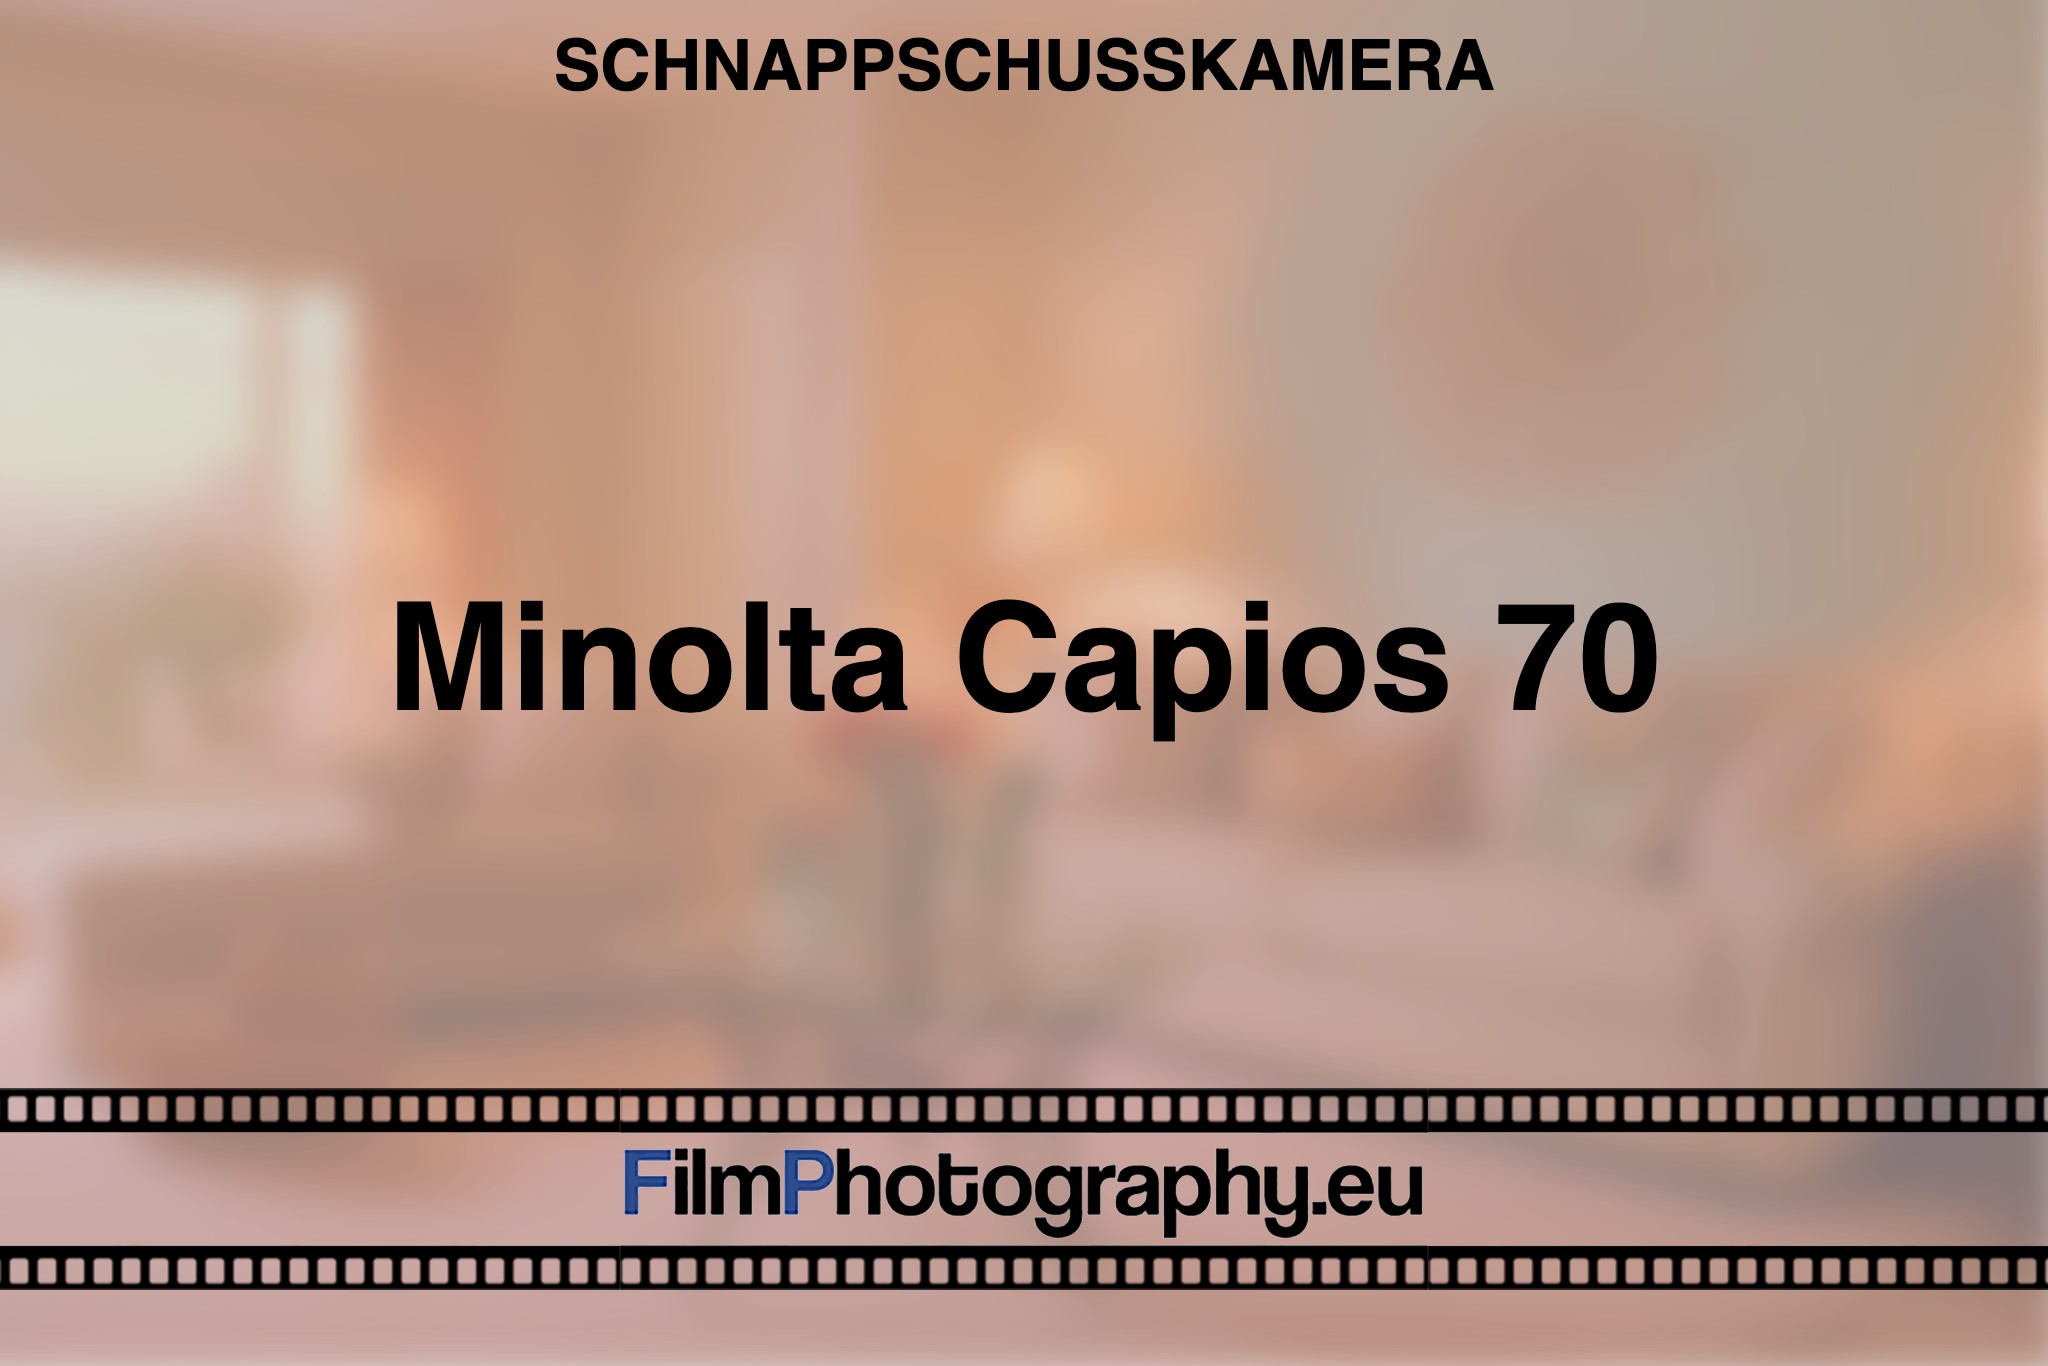 minolta-capios-70-schnappschusskamera-bnv